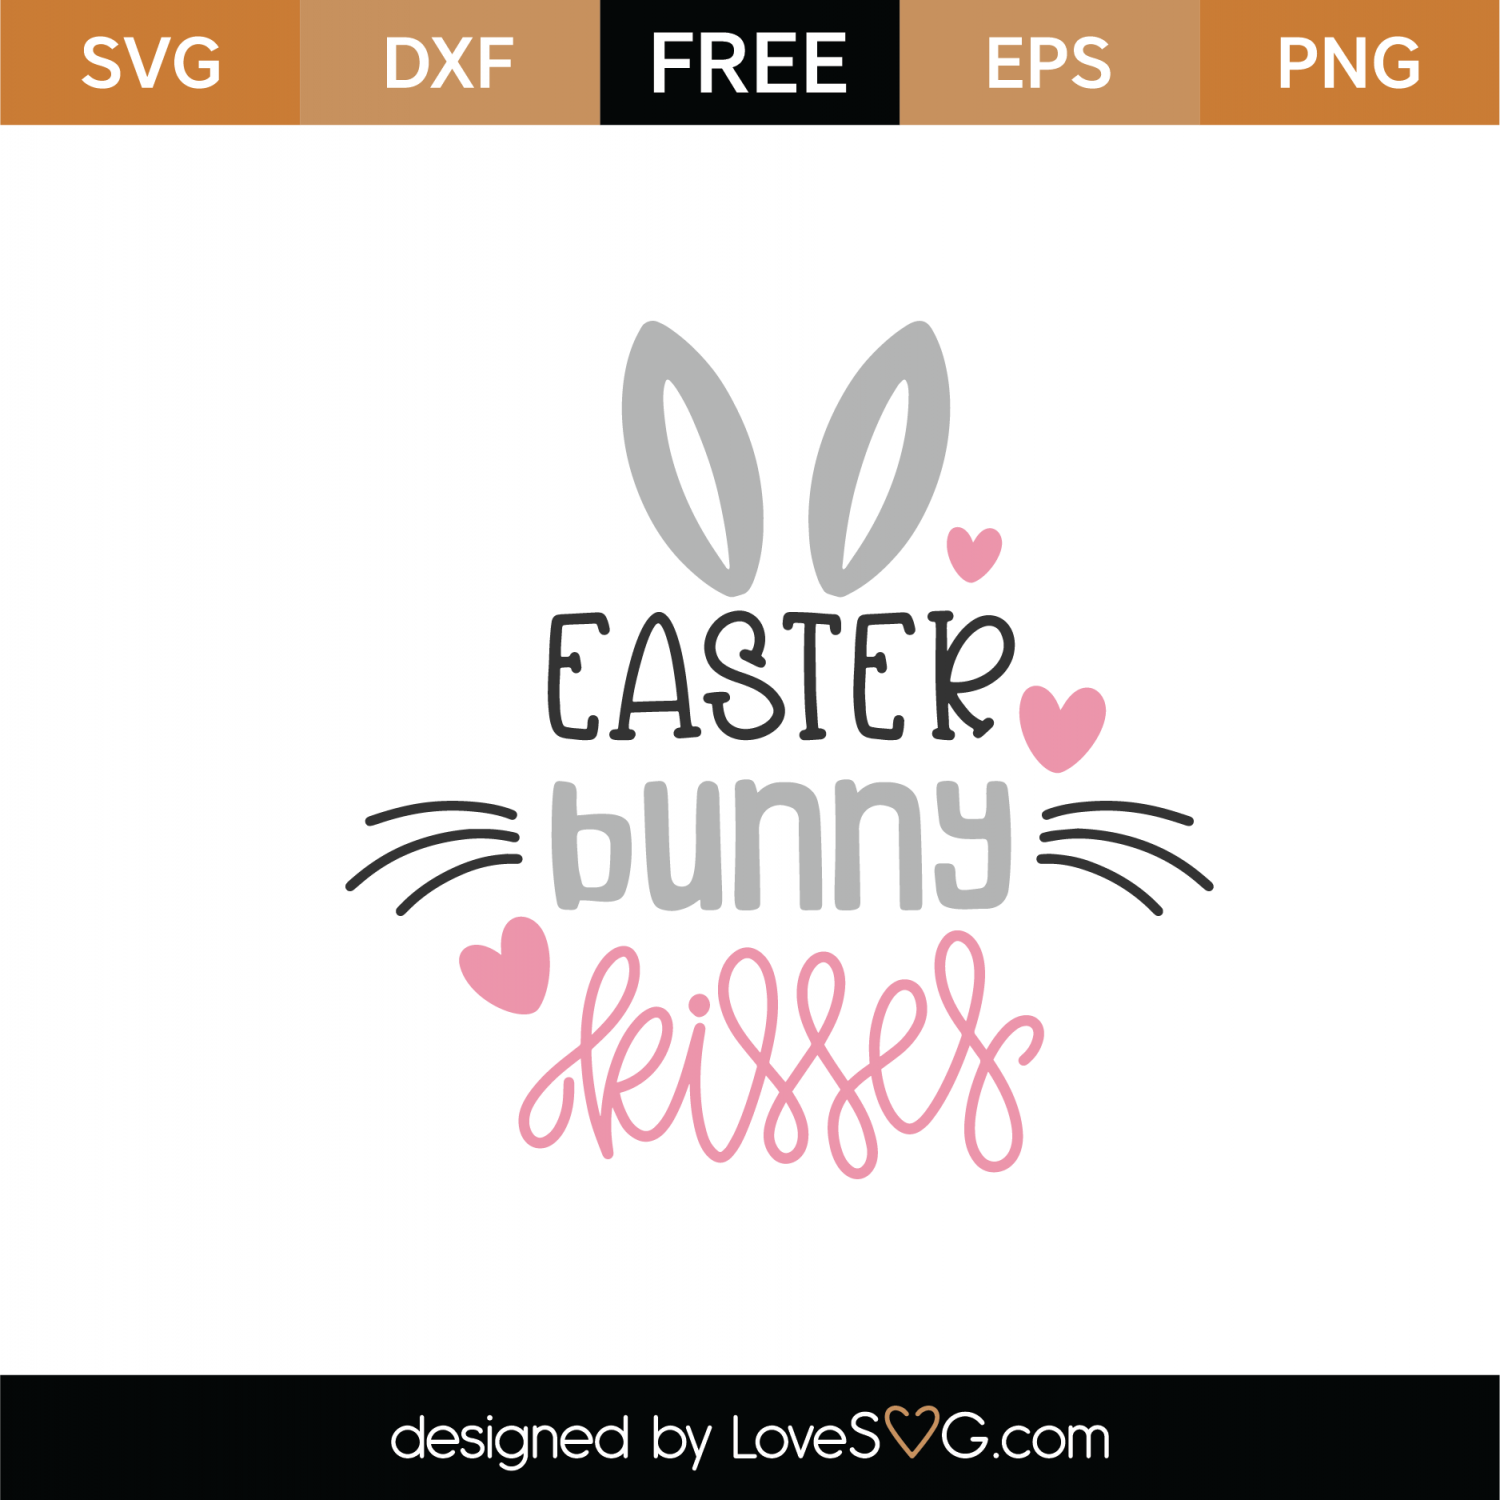 Free Easter Bunny Kisses SVG Cut File | Lovesvg.com